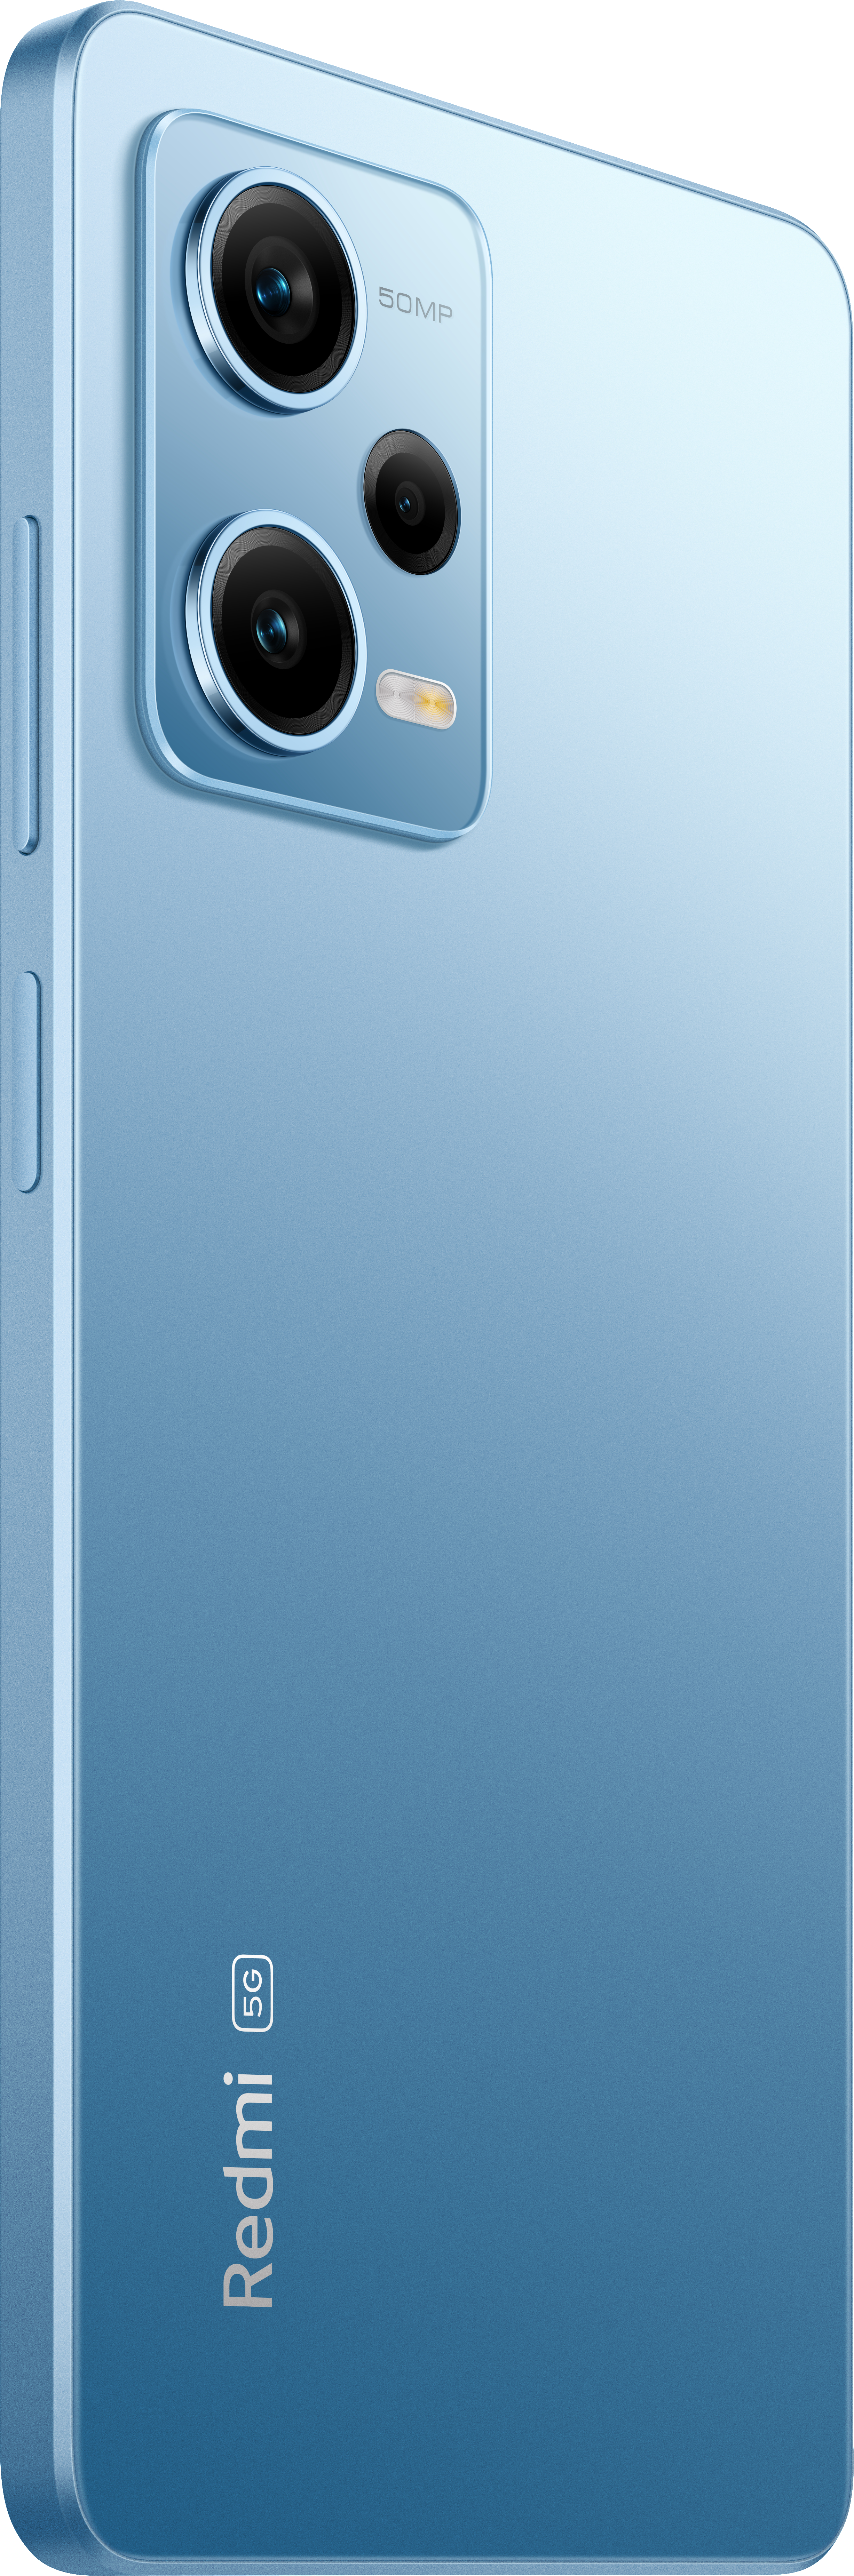 XIAOMI Redmi 5G SIM Sky 12 GB 128 Note Blue Pro Dual